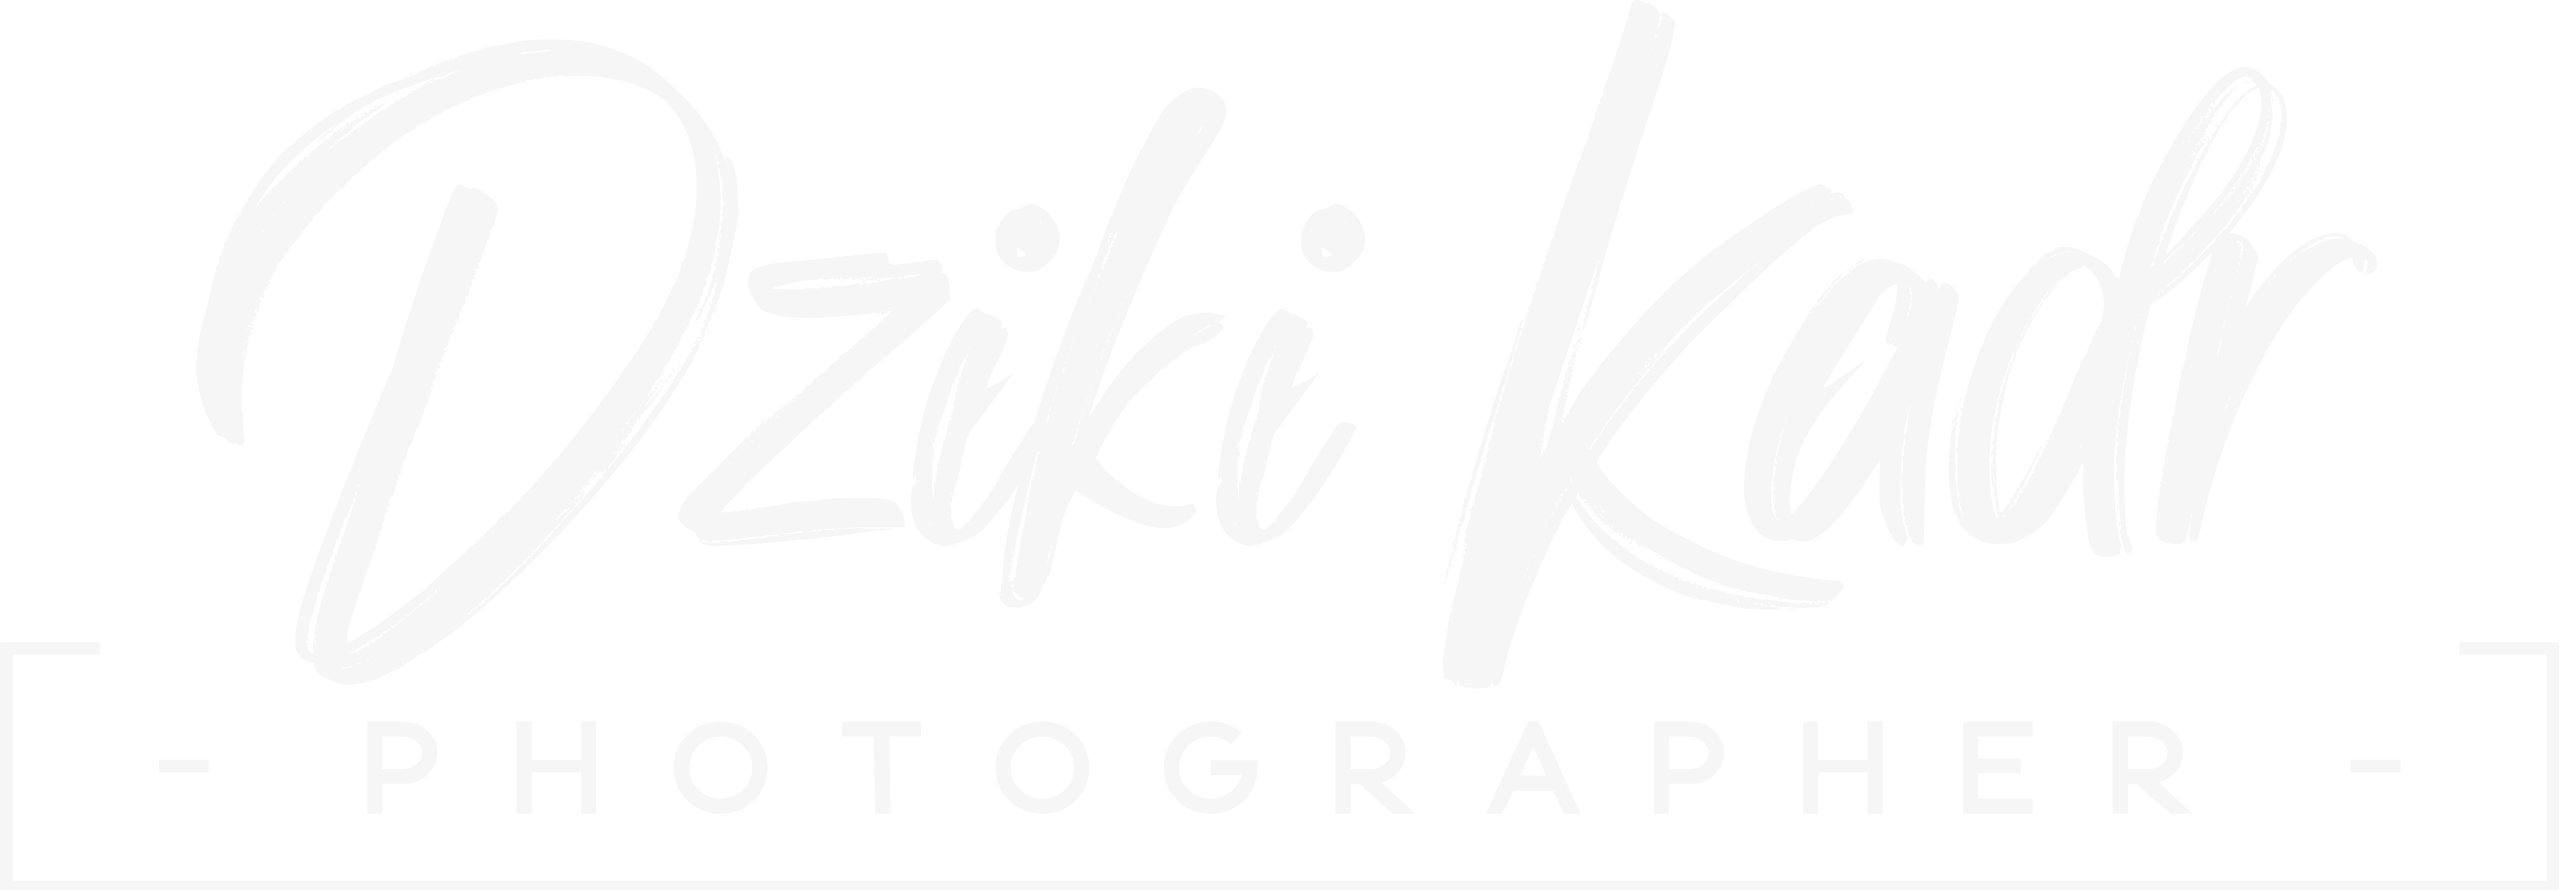 dzikikadr.com.pl logo